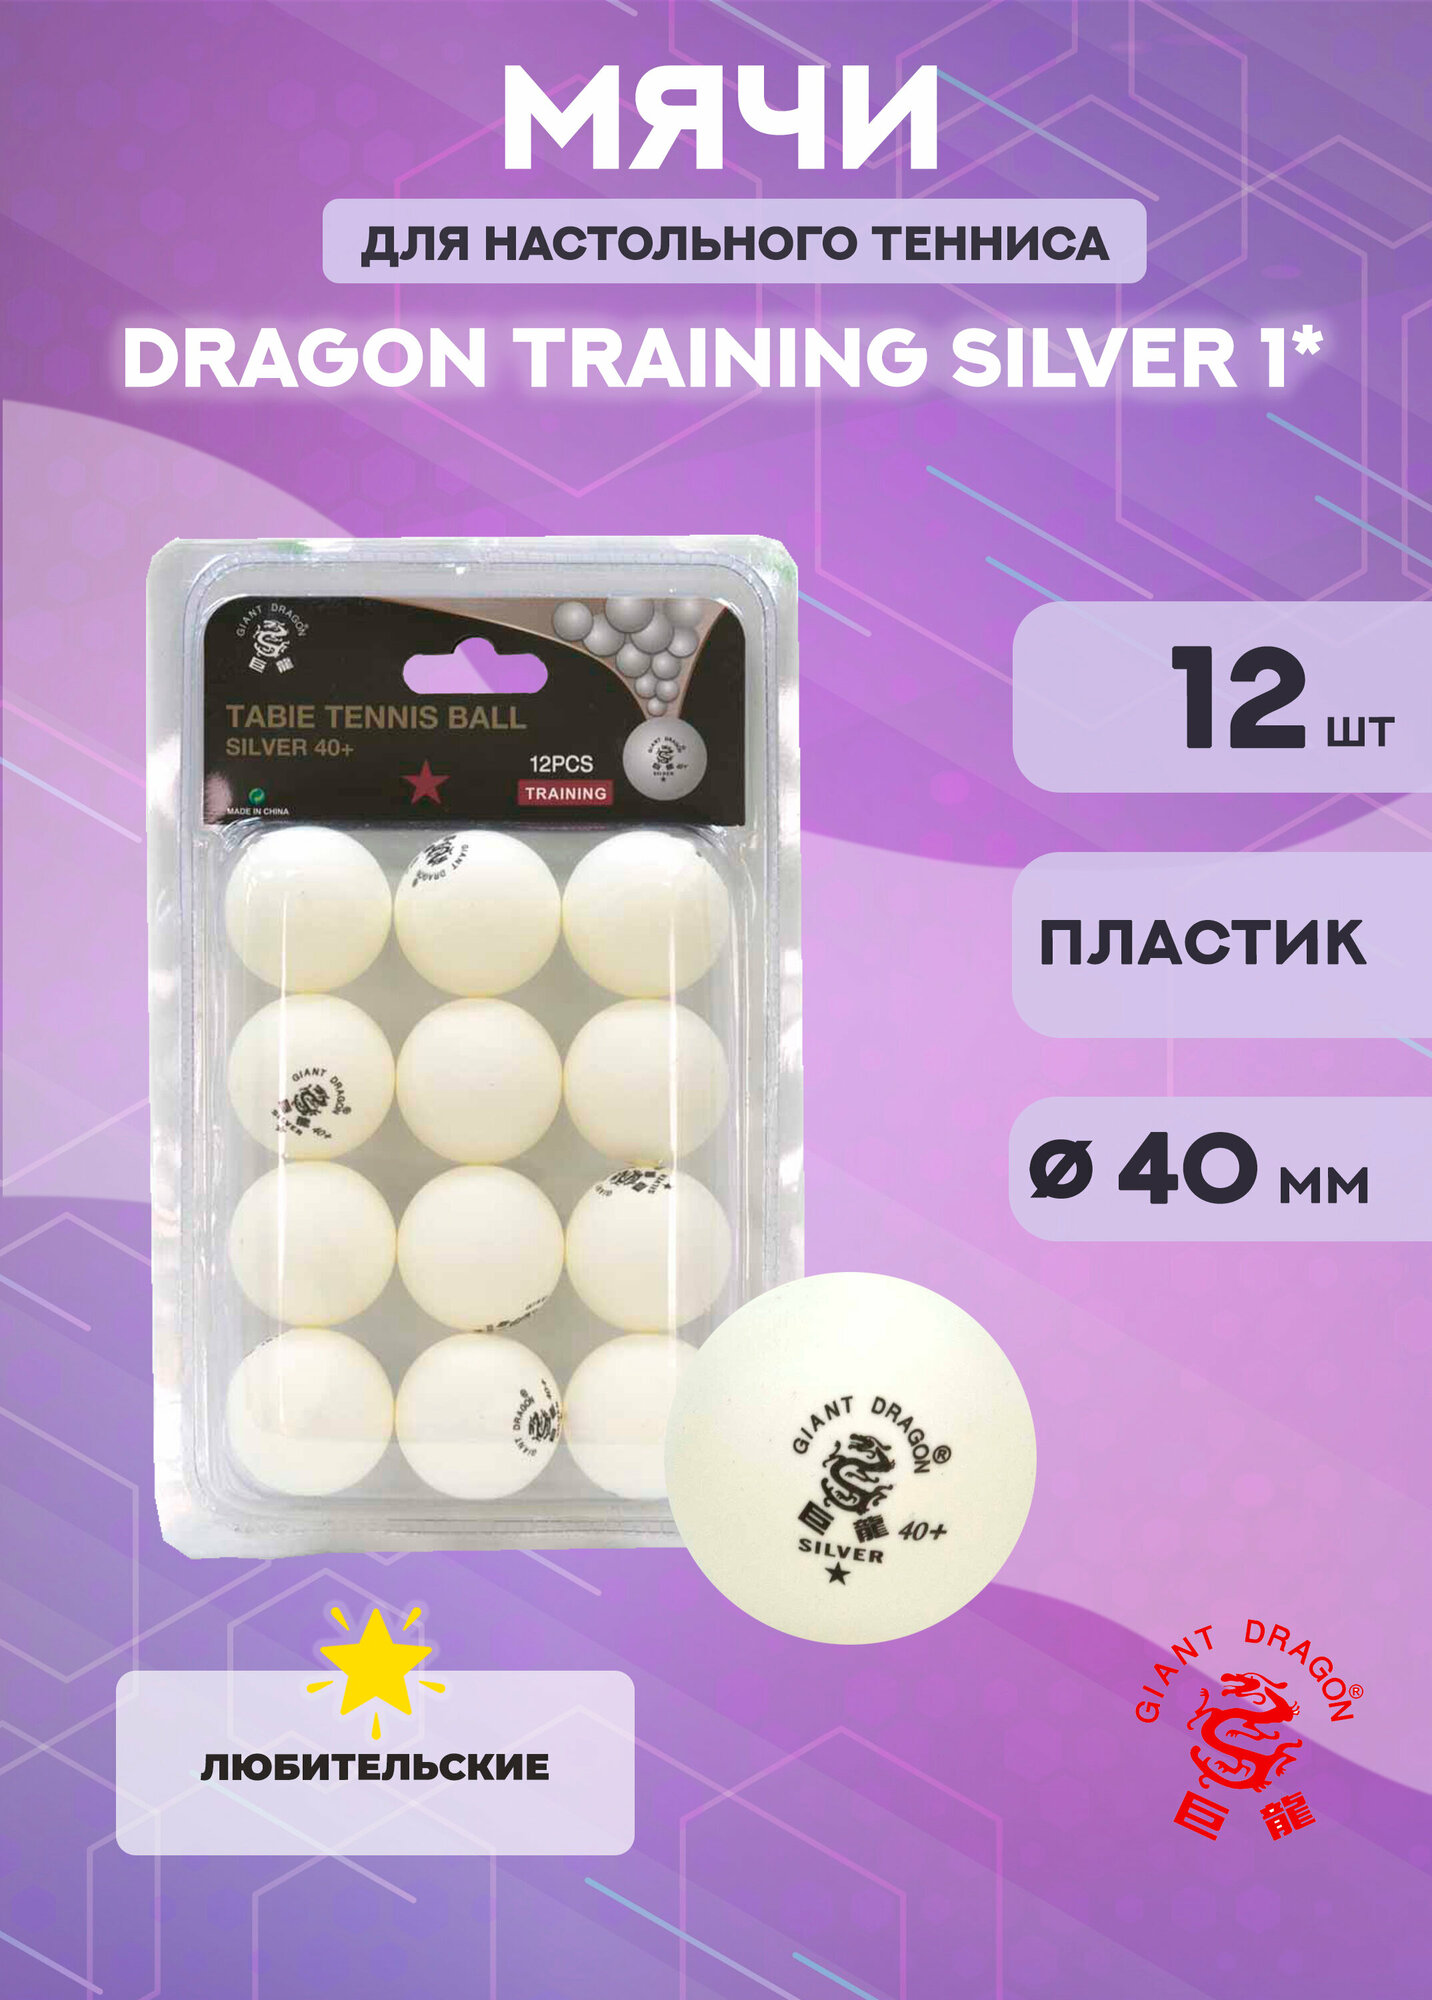 Мячи Dragon Training Silver 1* (12 шт, белые)